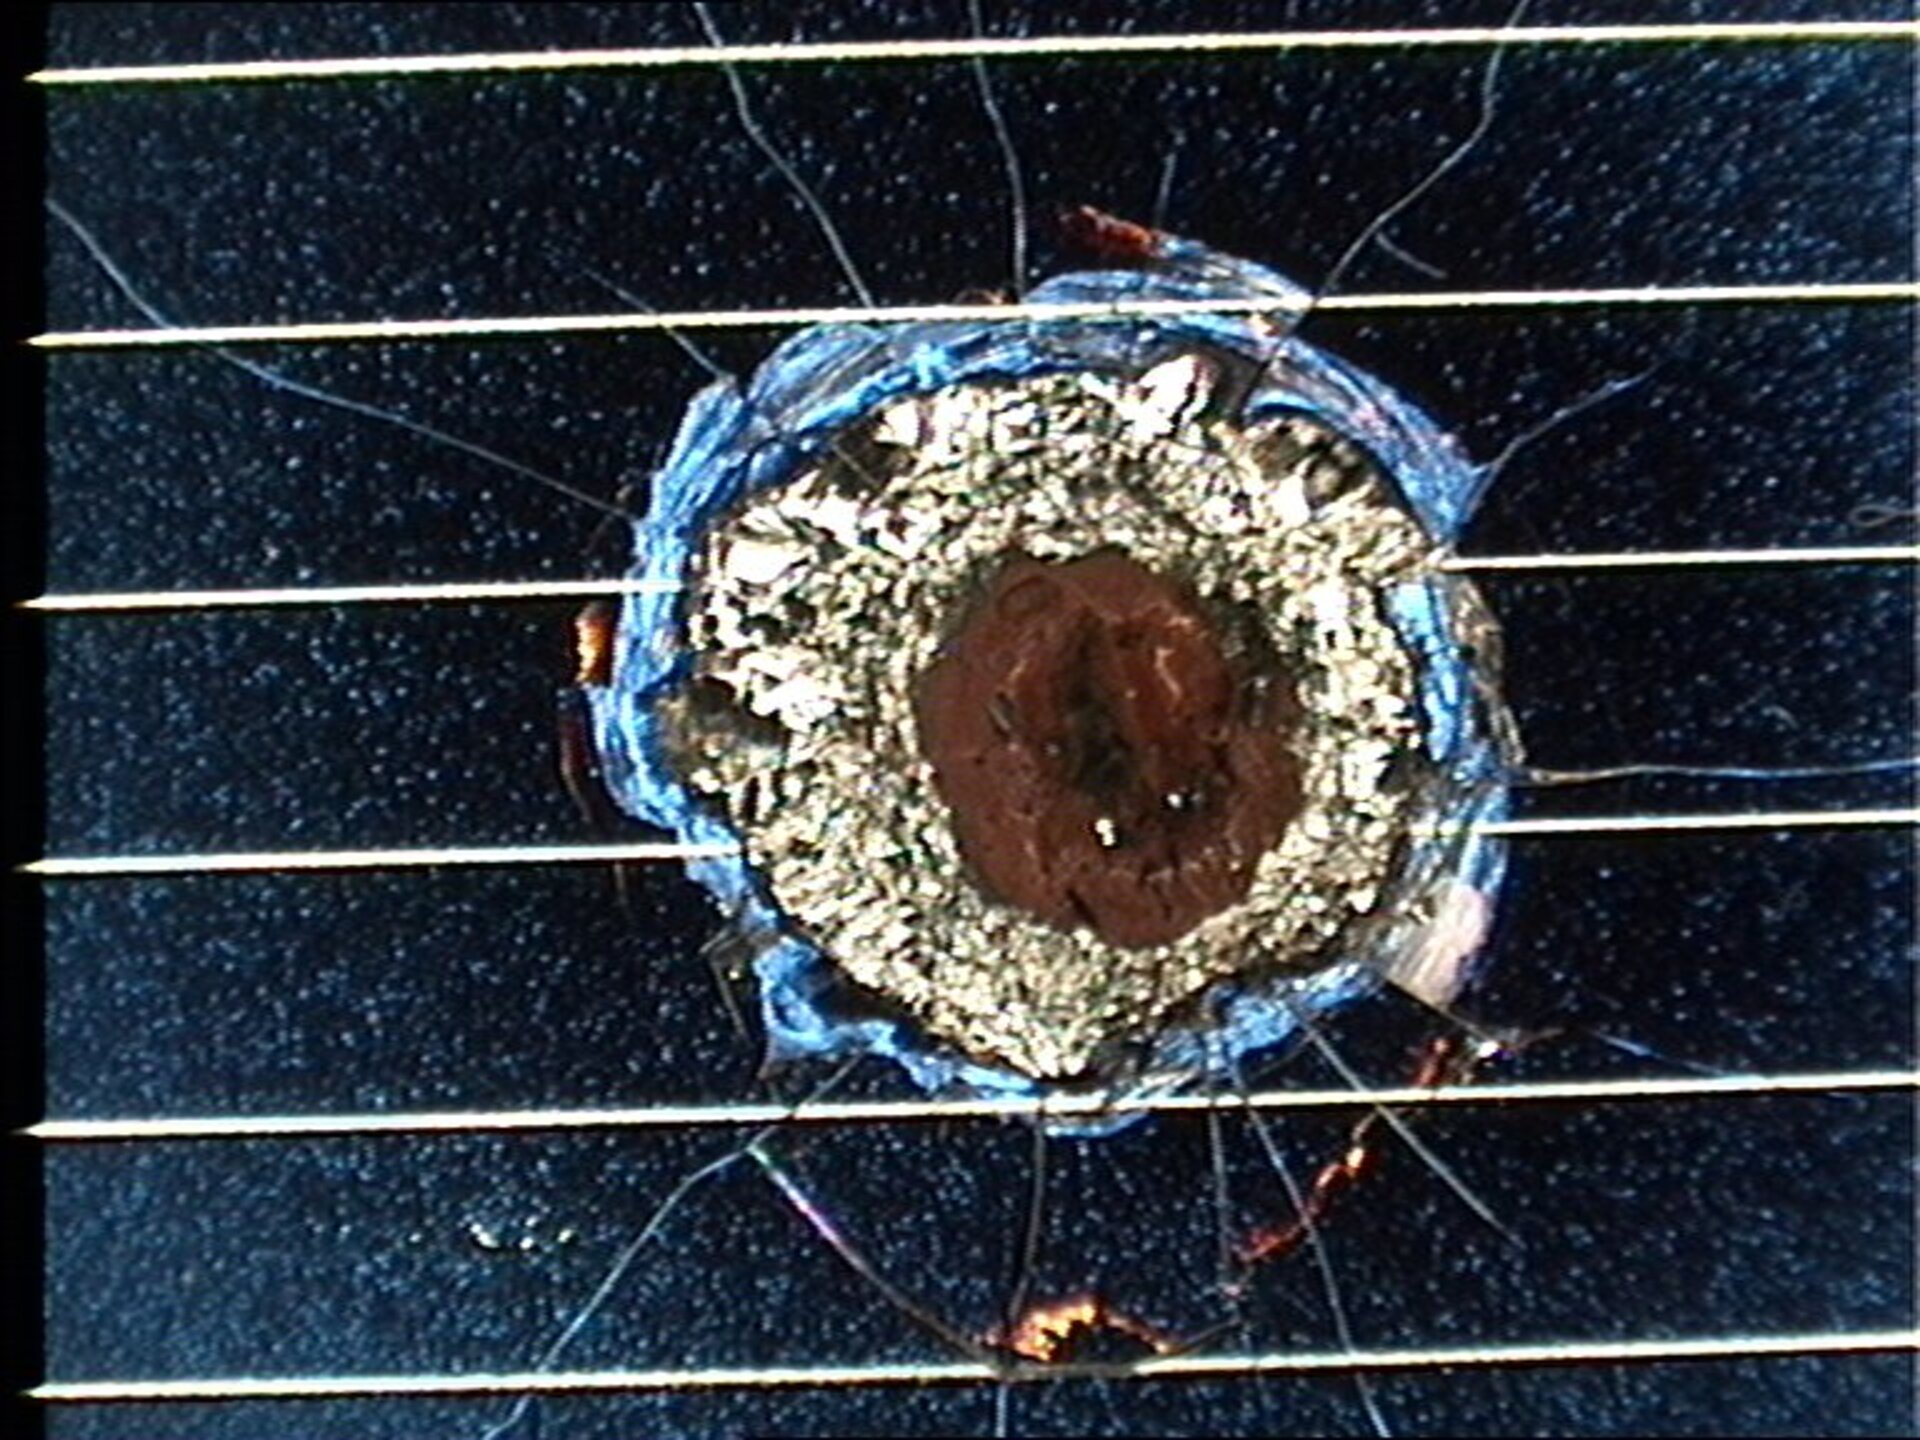 Hubble solar cell impact damage